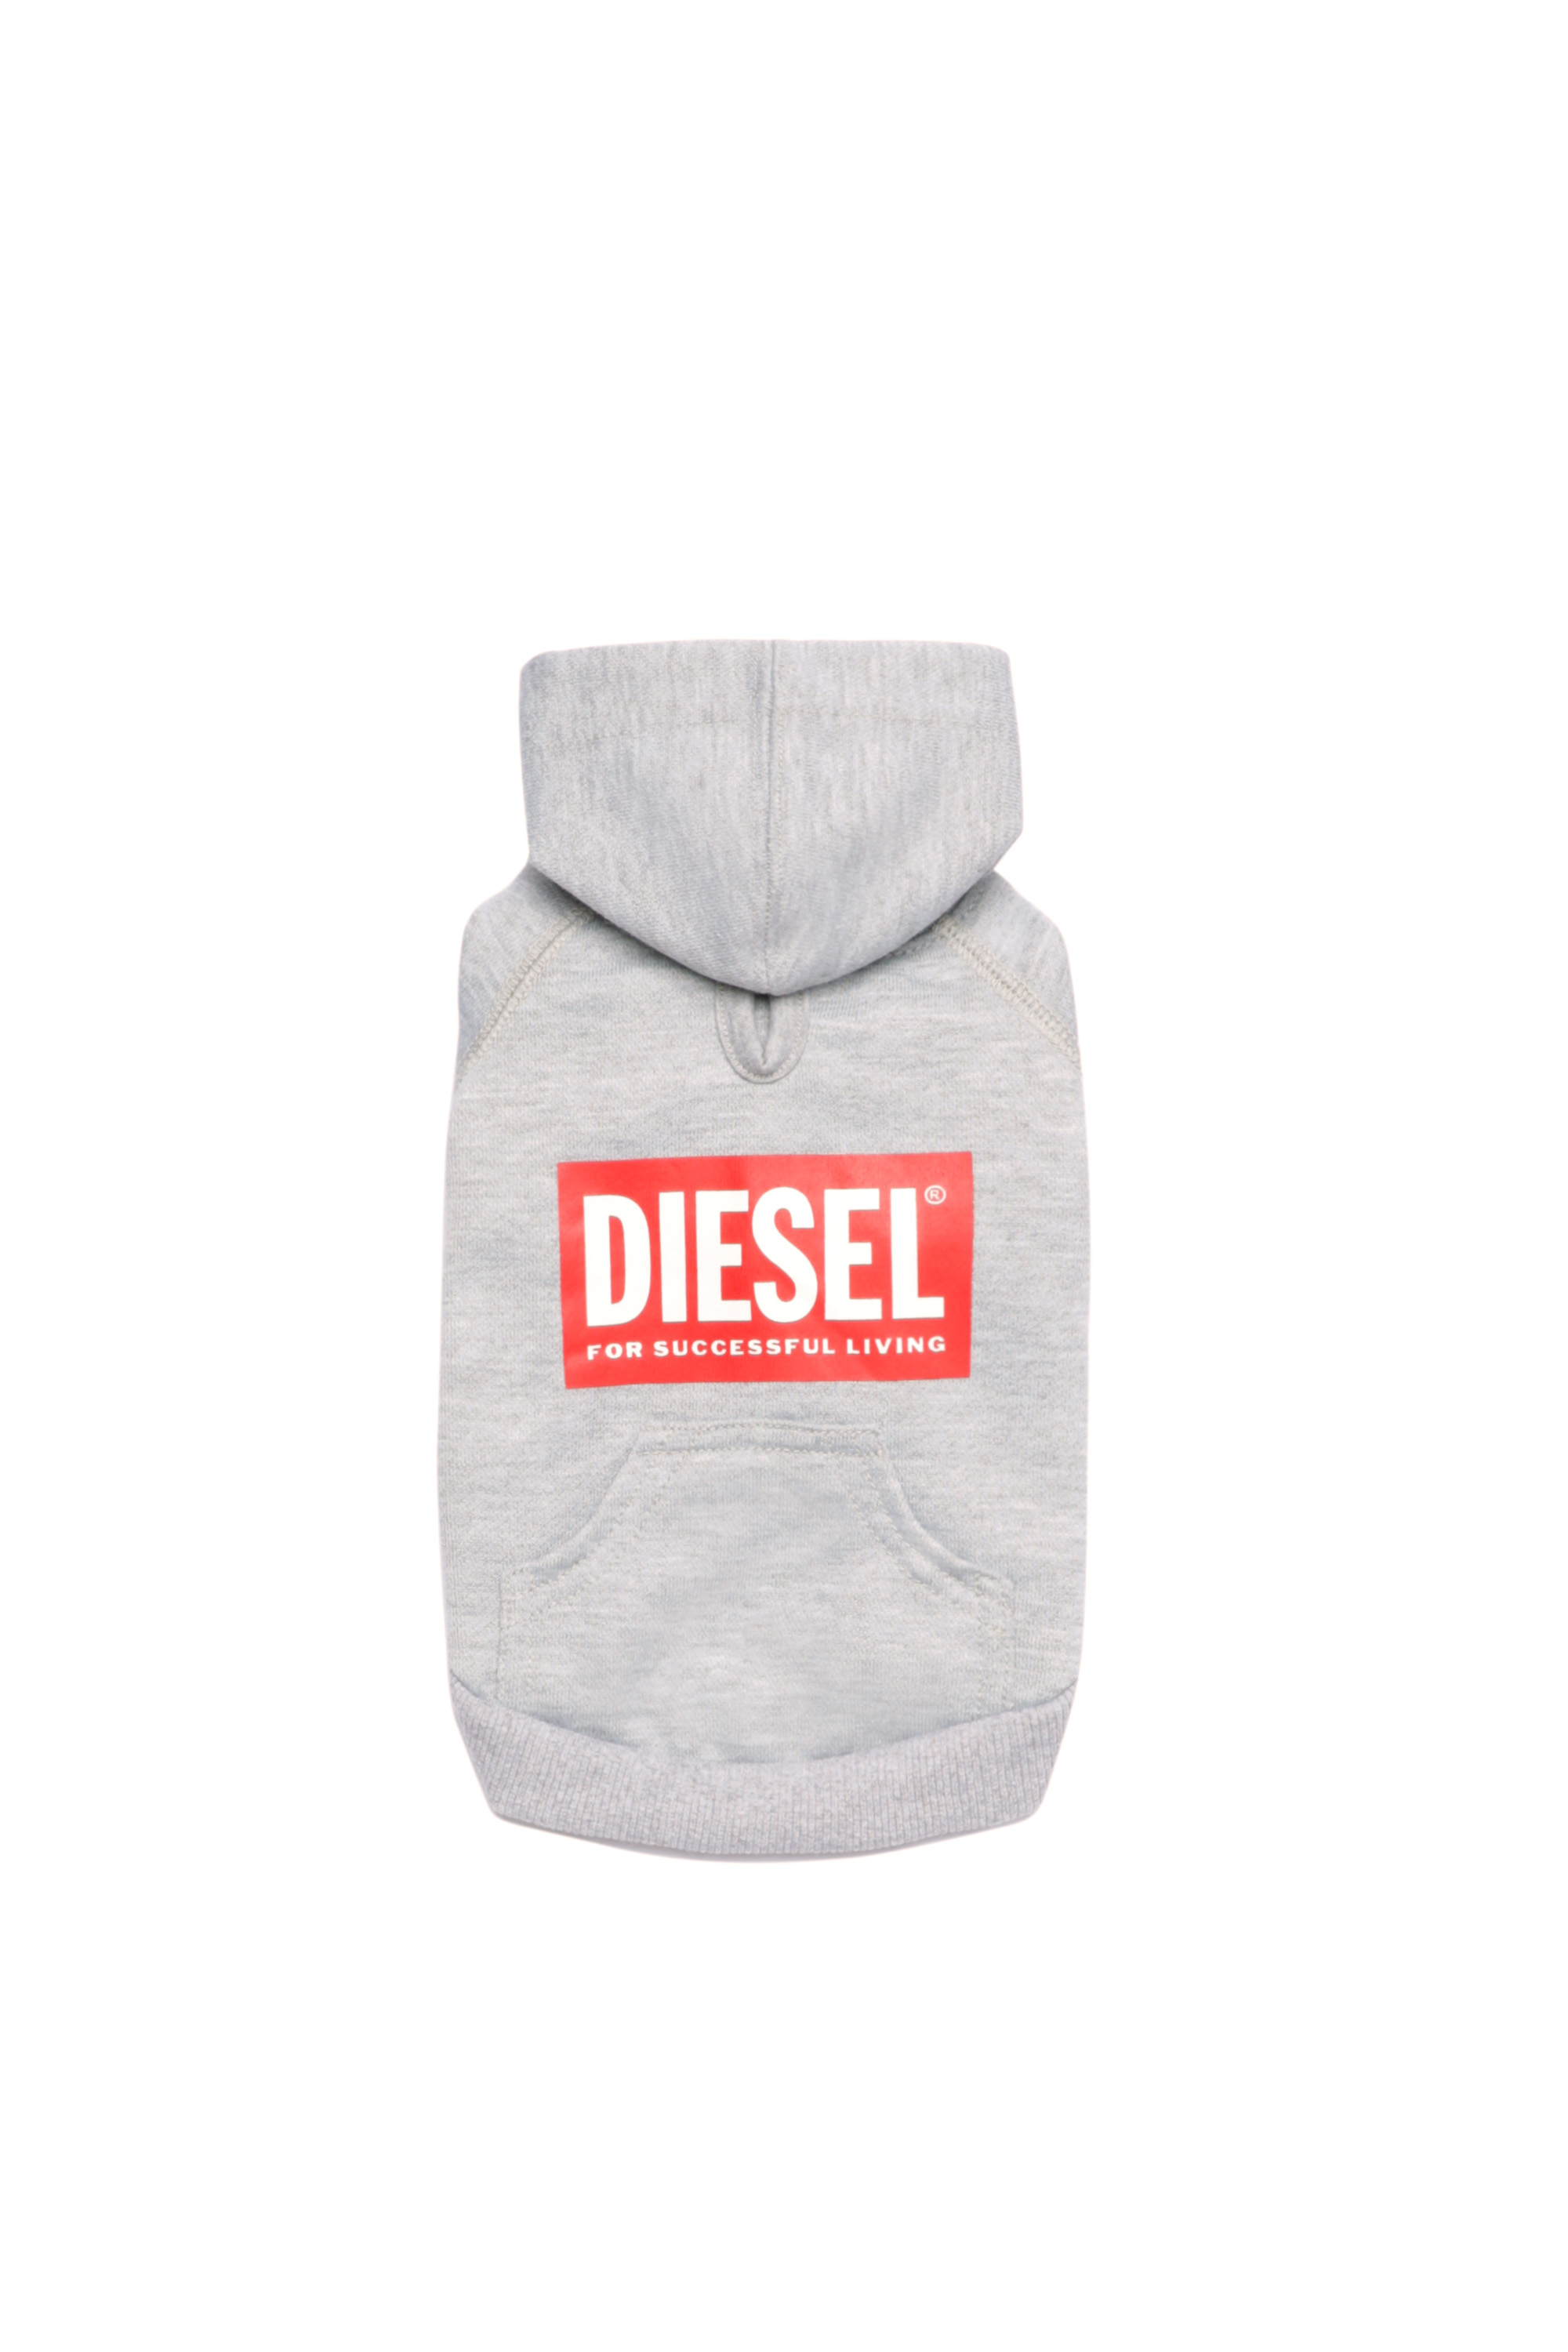 Diesel - PET-SCOTTO, Grey - Image 1